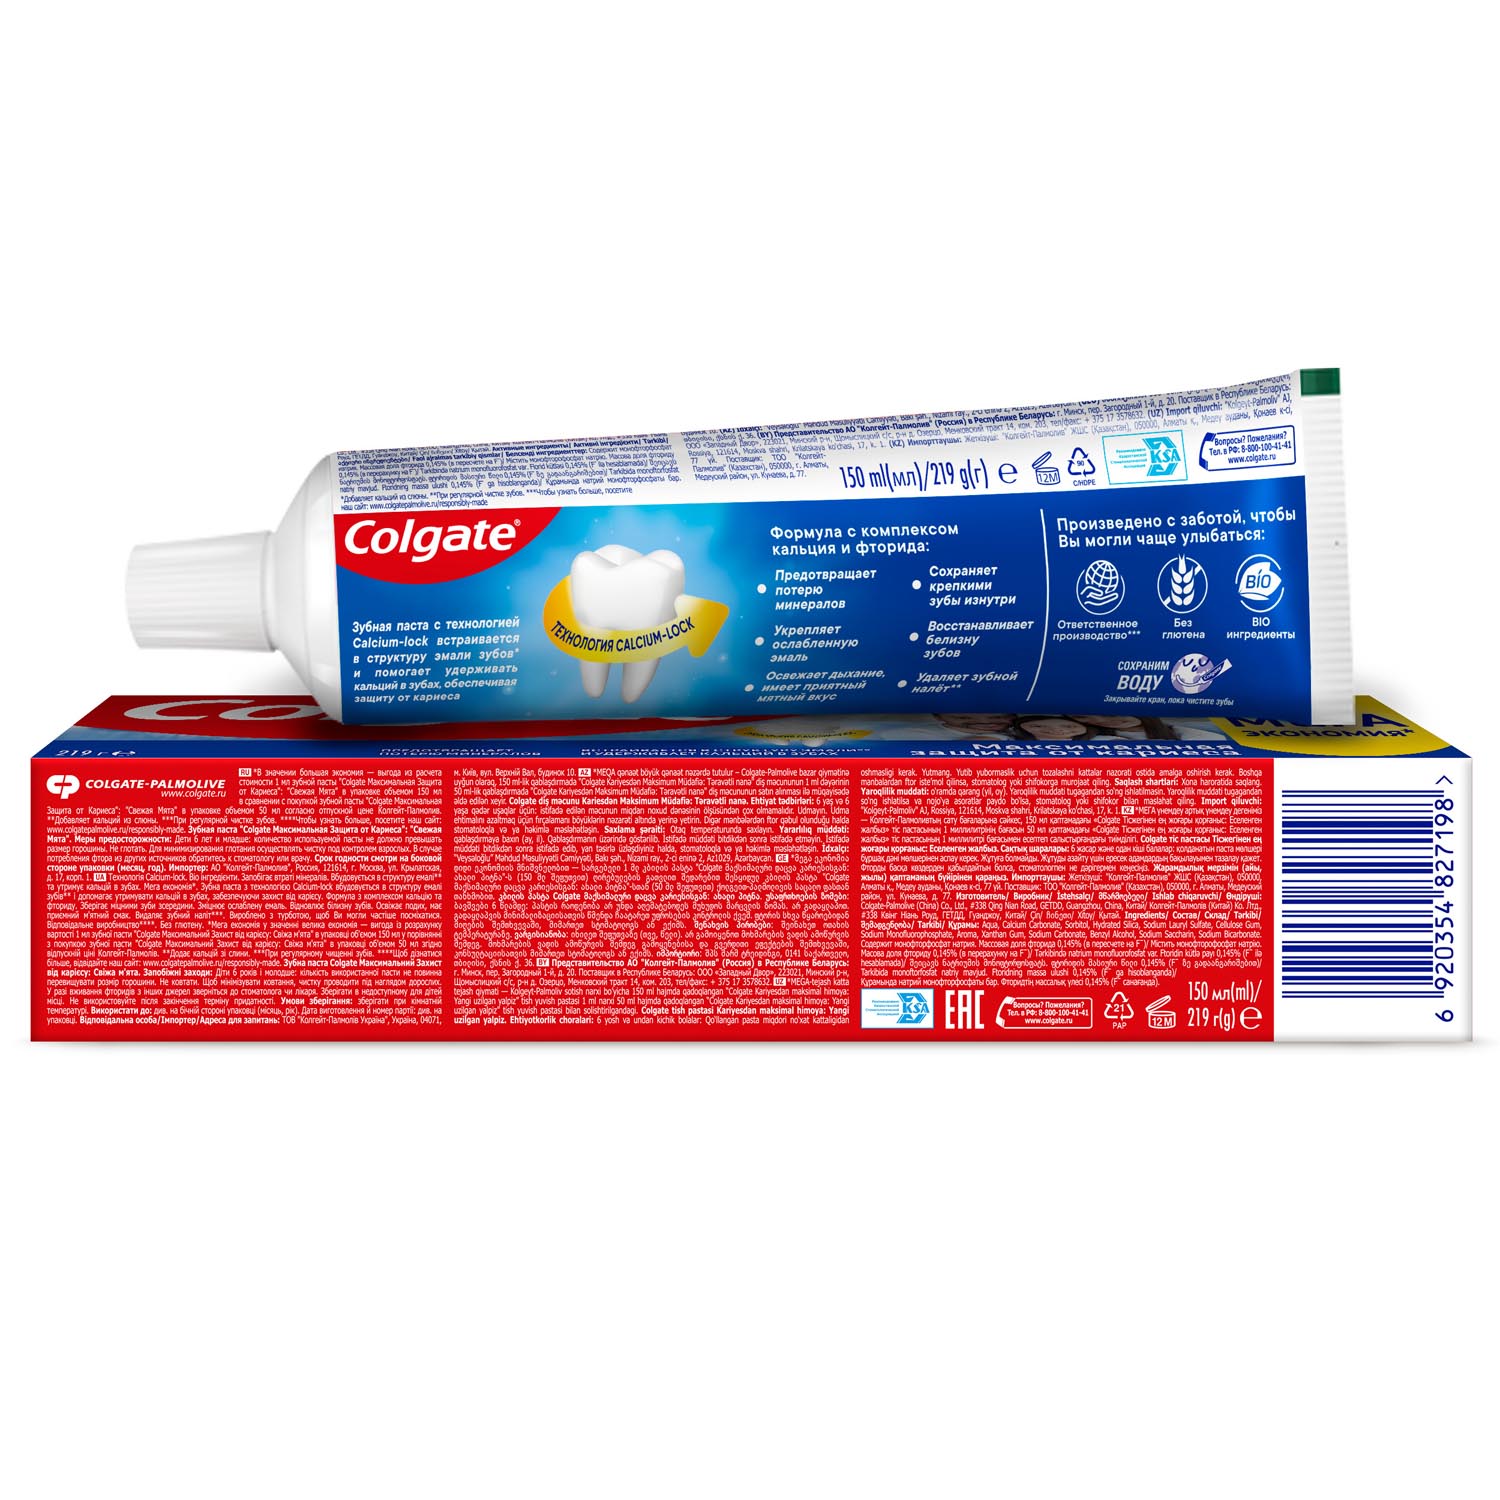 Зубная паста Colgate Максимальная Защита от кариеса Свежая мята 150 мл - фото 3